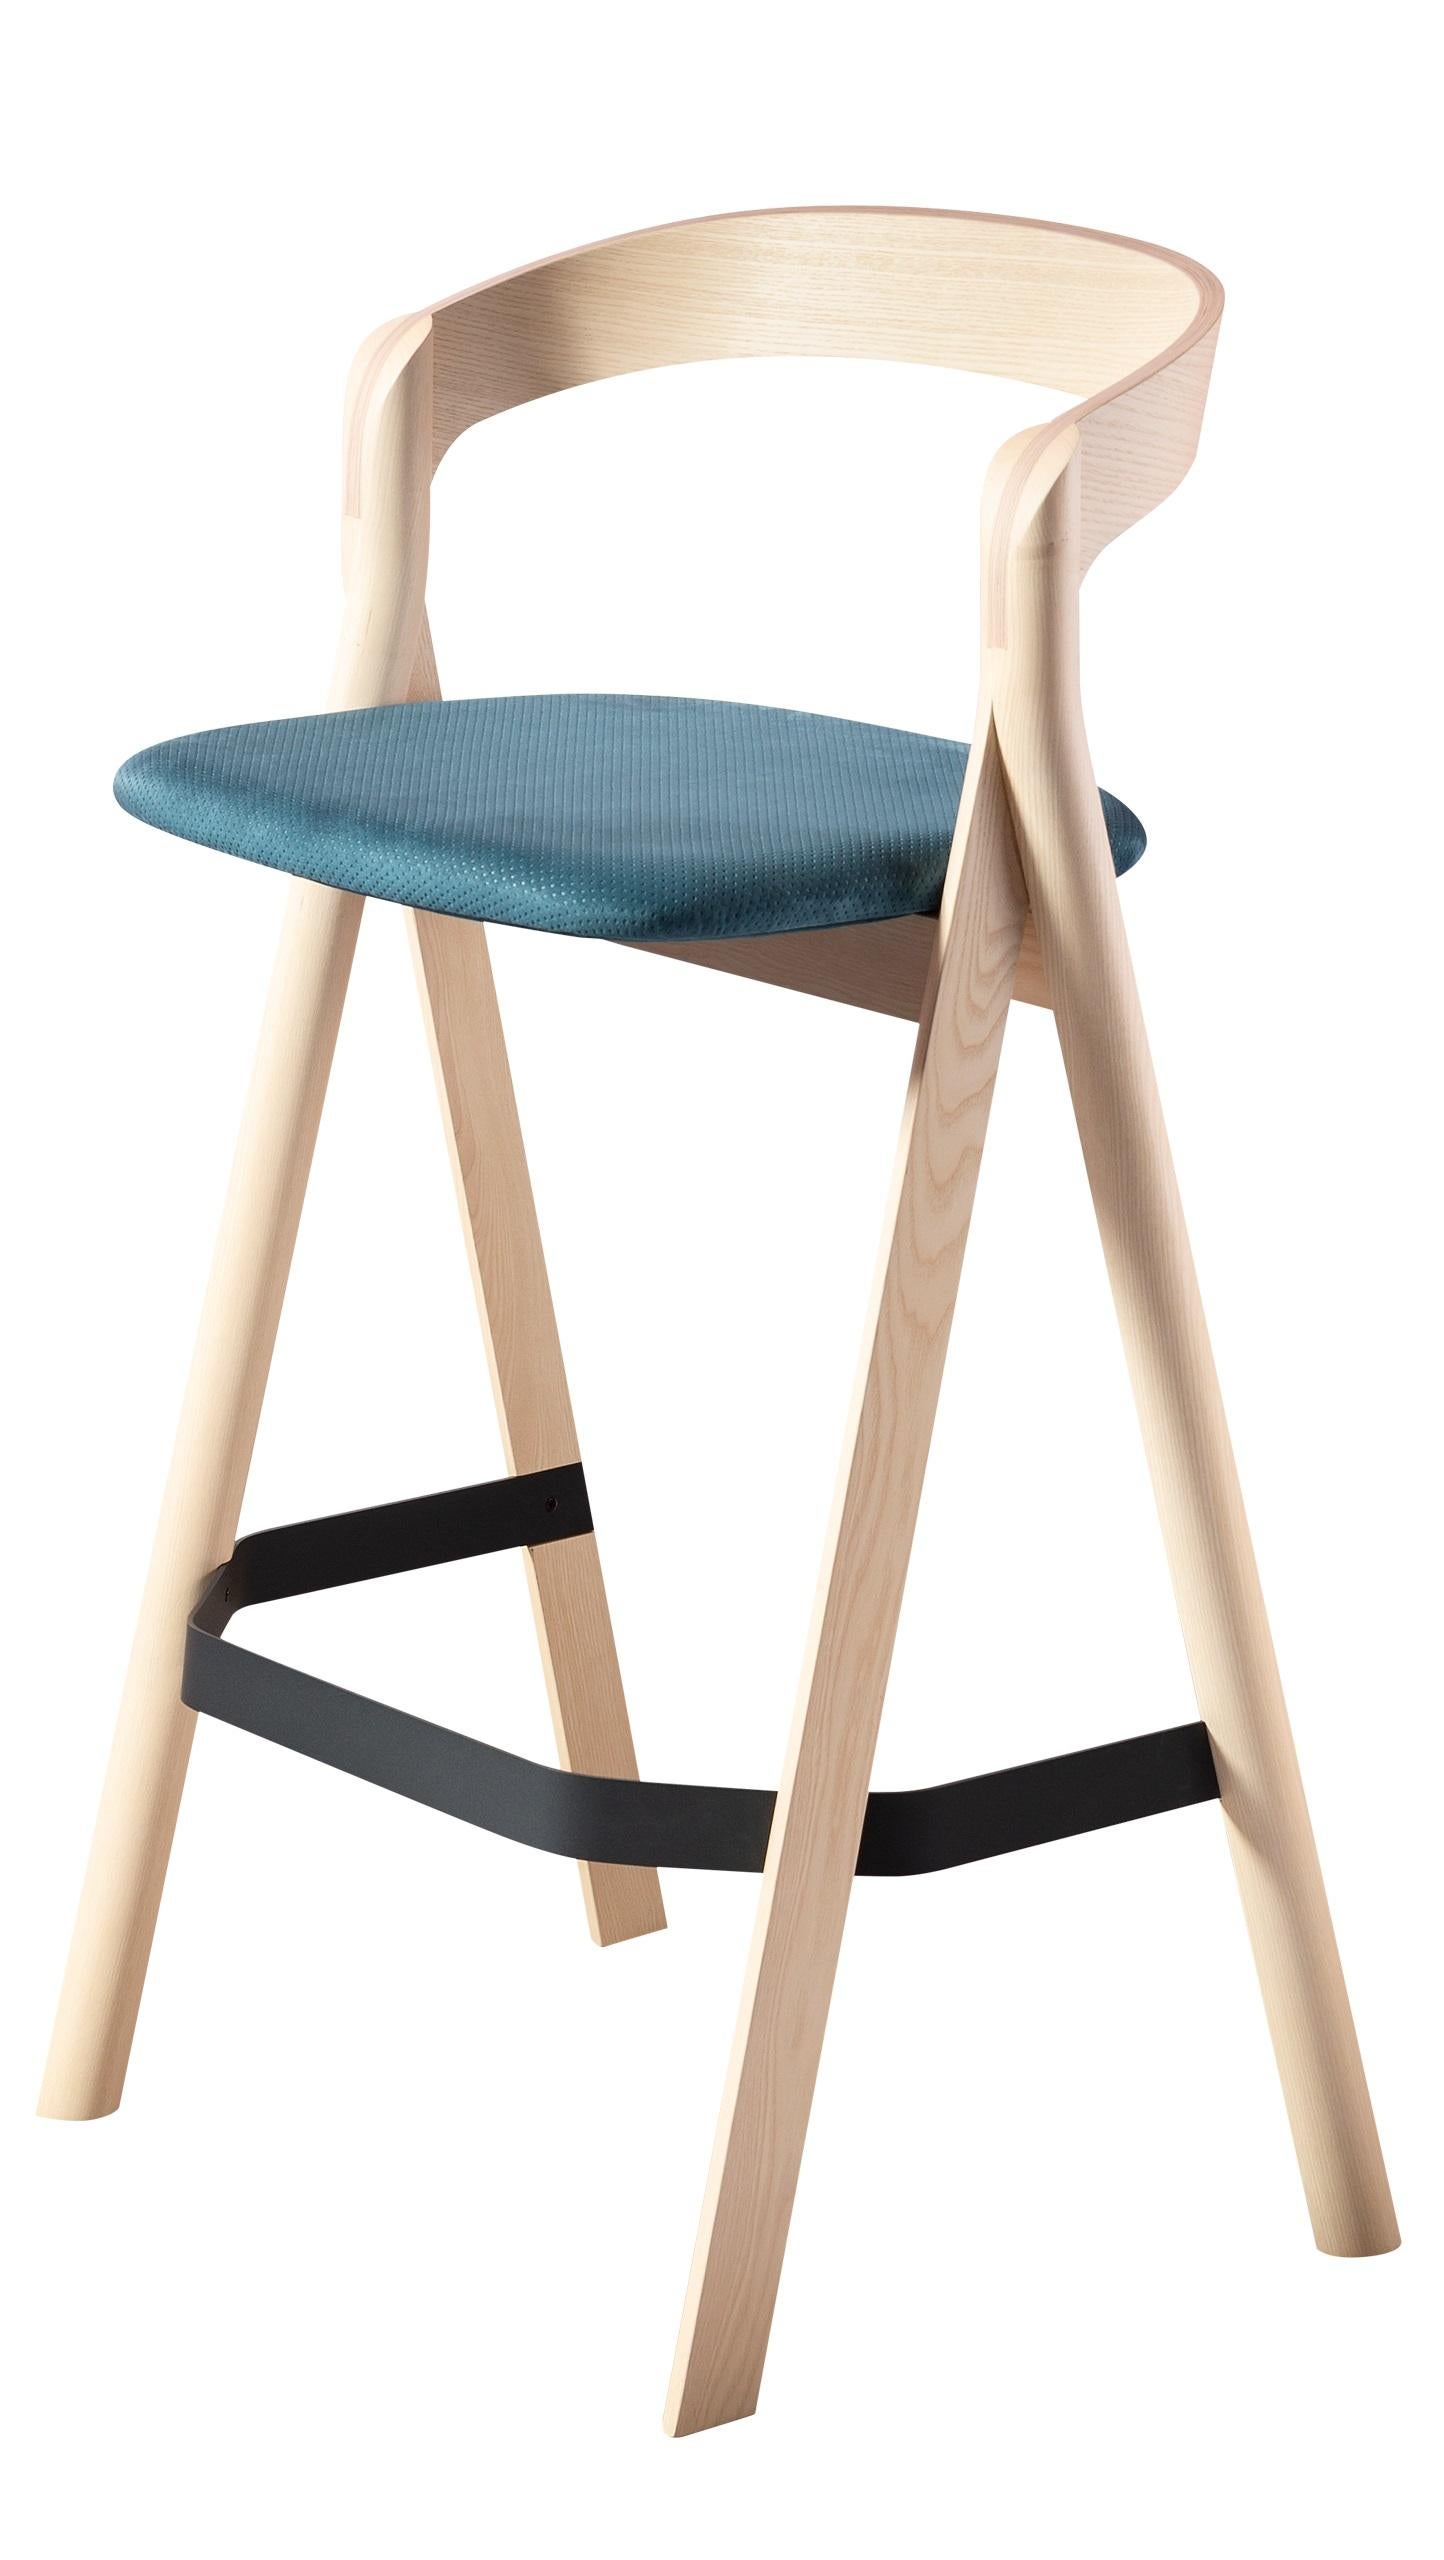 For Sale: Blue (Sponge Blue) Diverge Stool in Ash Structure, Upholstered Seat, by Skrivo Design 2